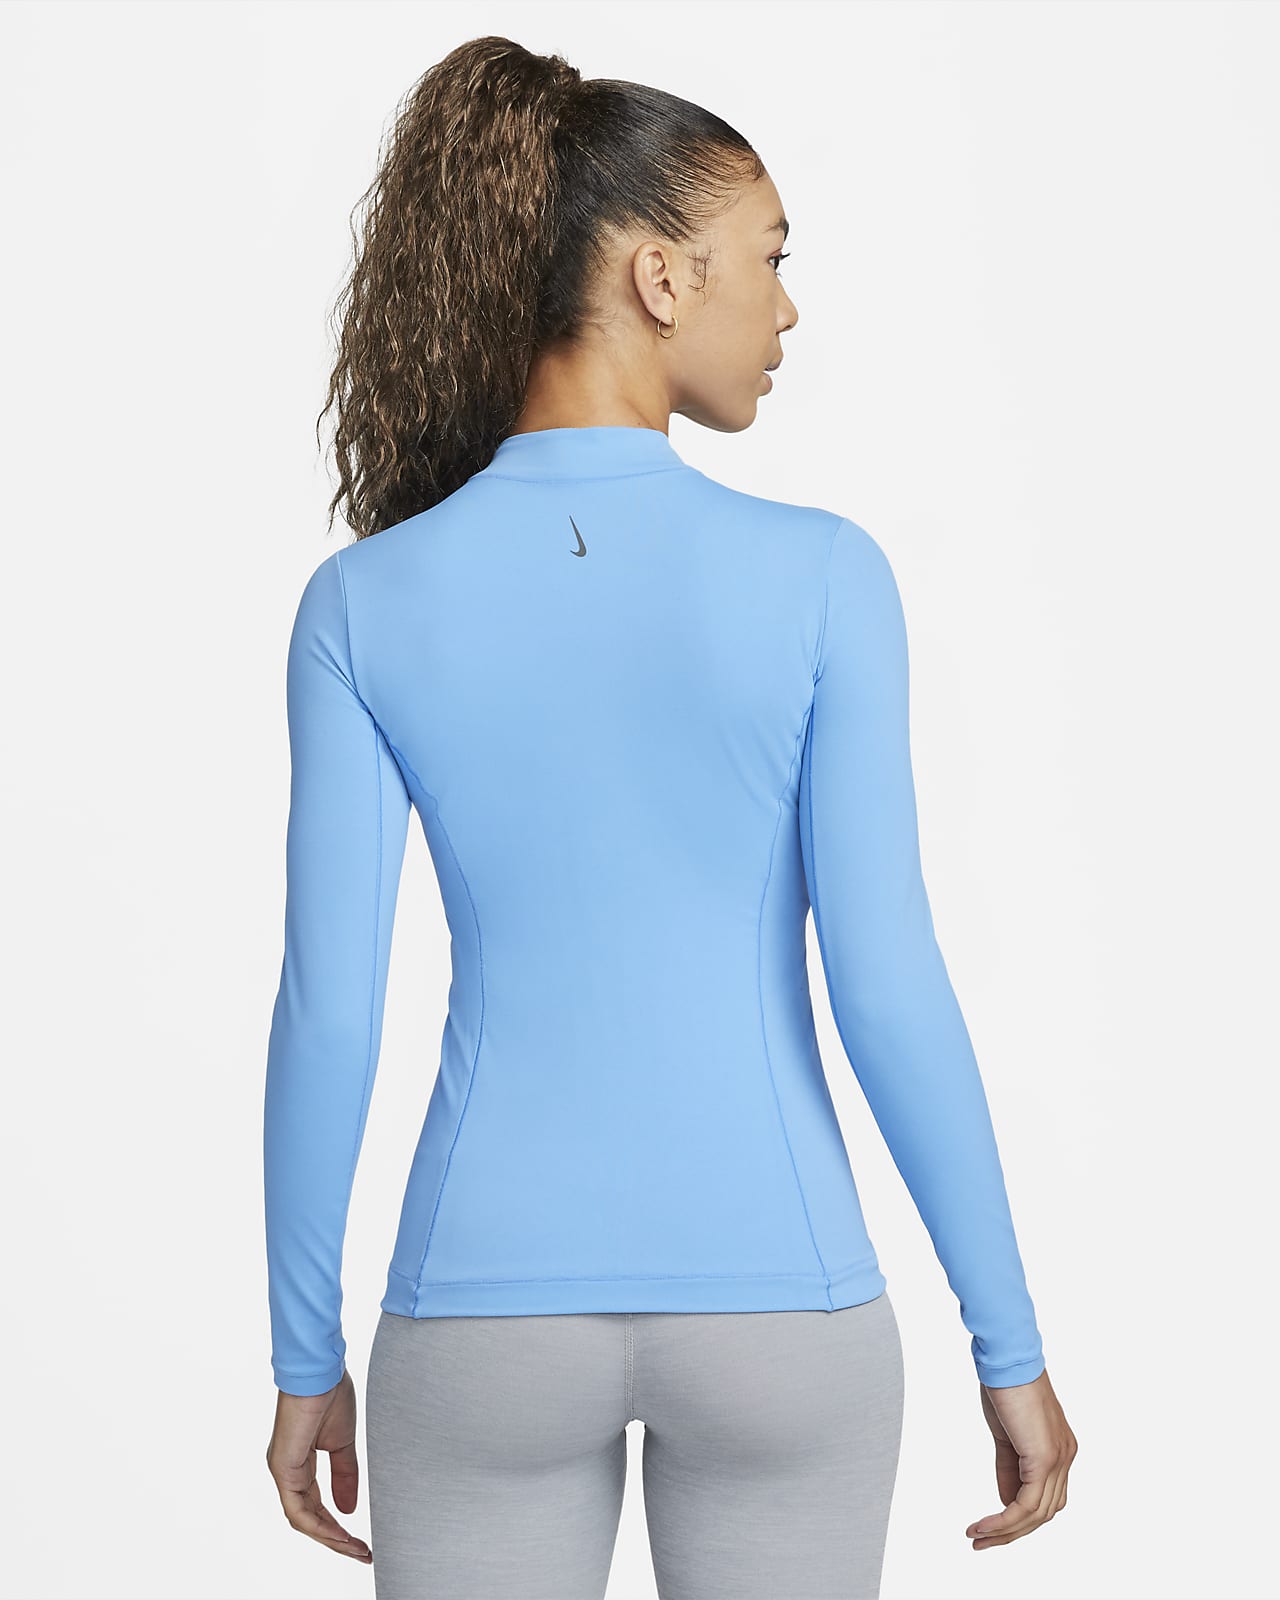 Nike Yoga Dri-FIT Long-Sleeve Top - Women's 